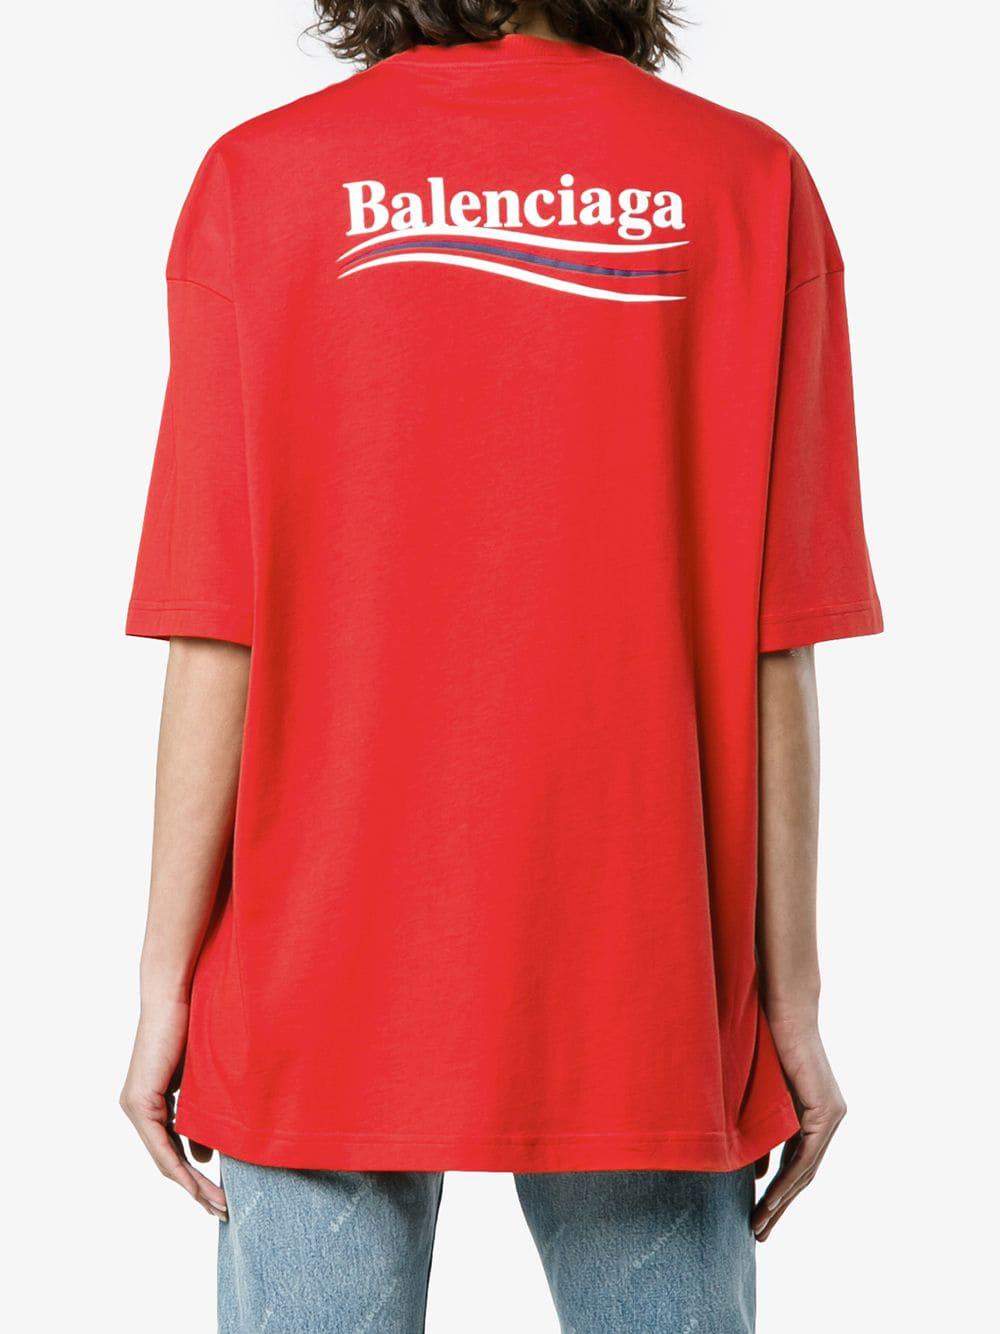 Balenciaga Logo Print T-shirt in Red | Lyst